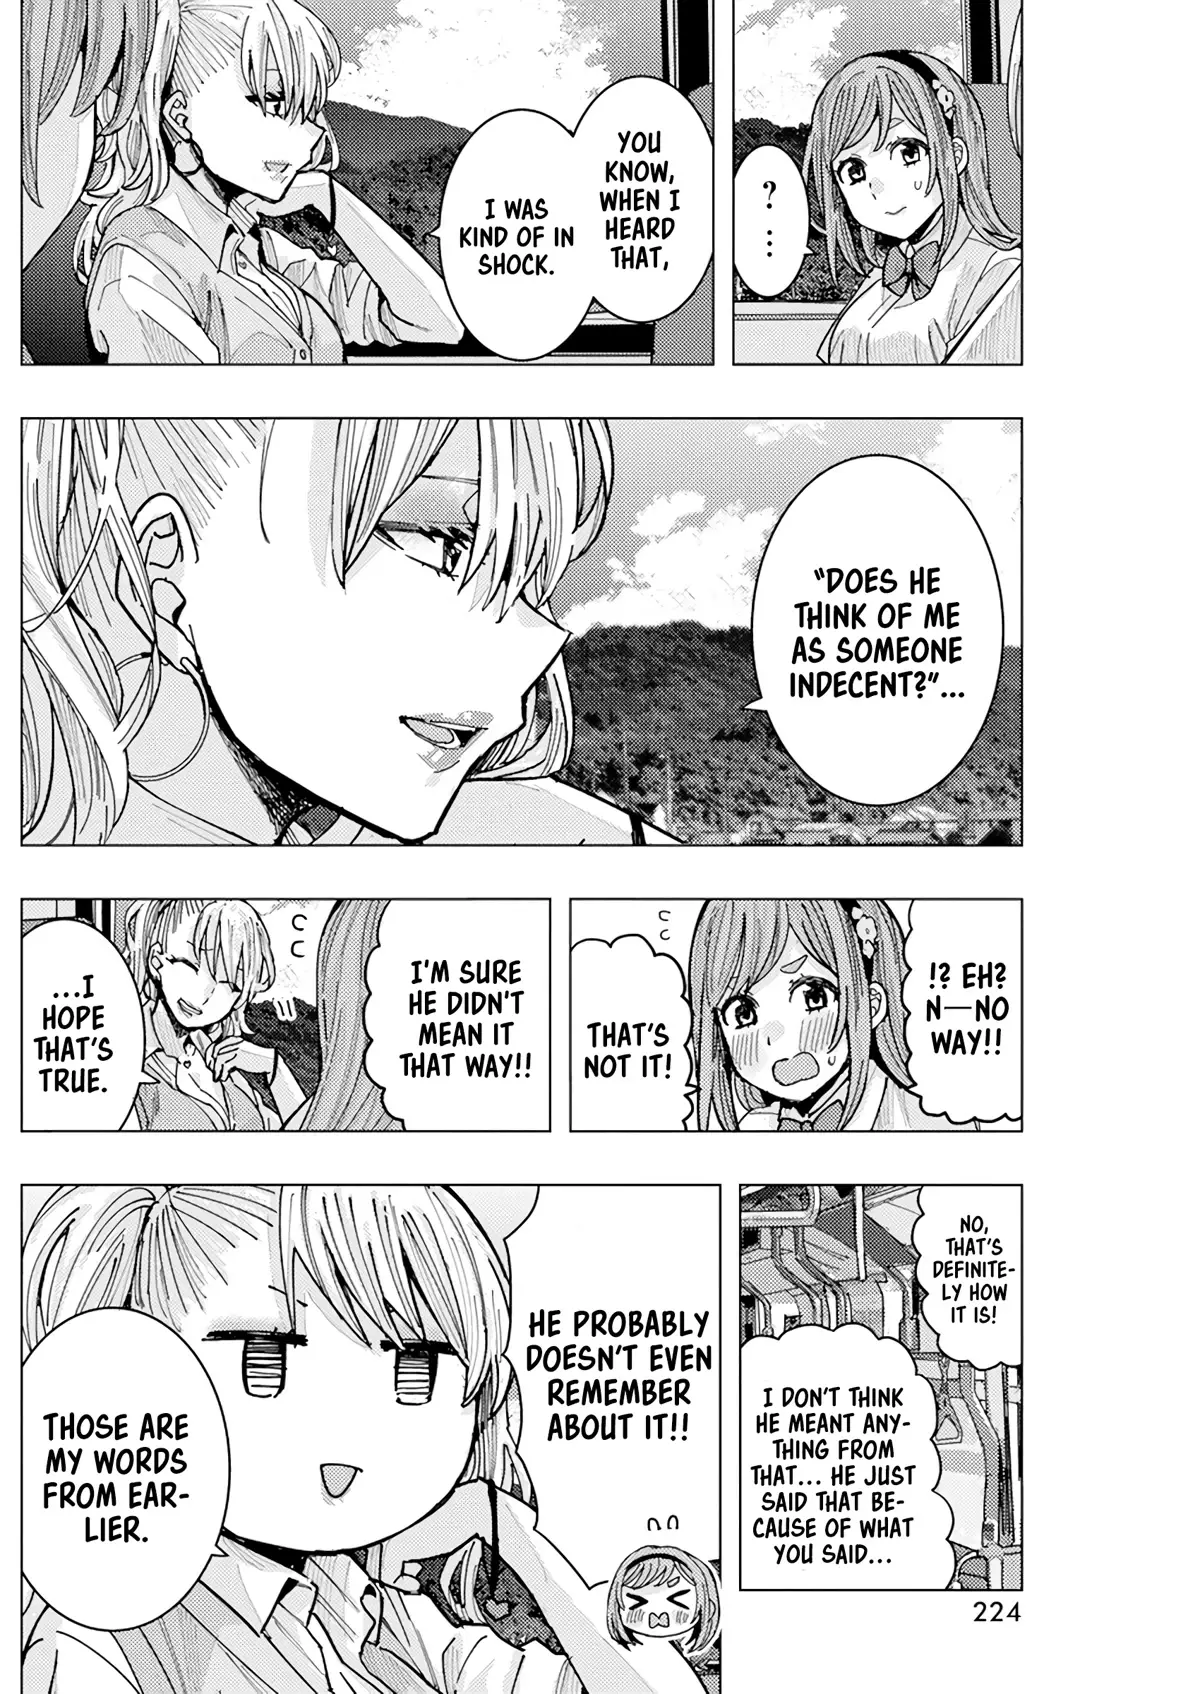 "nobukuni-San" Does She Like Me? - 20 page 9-8567aea0